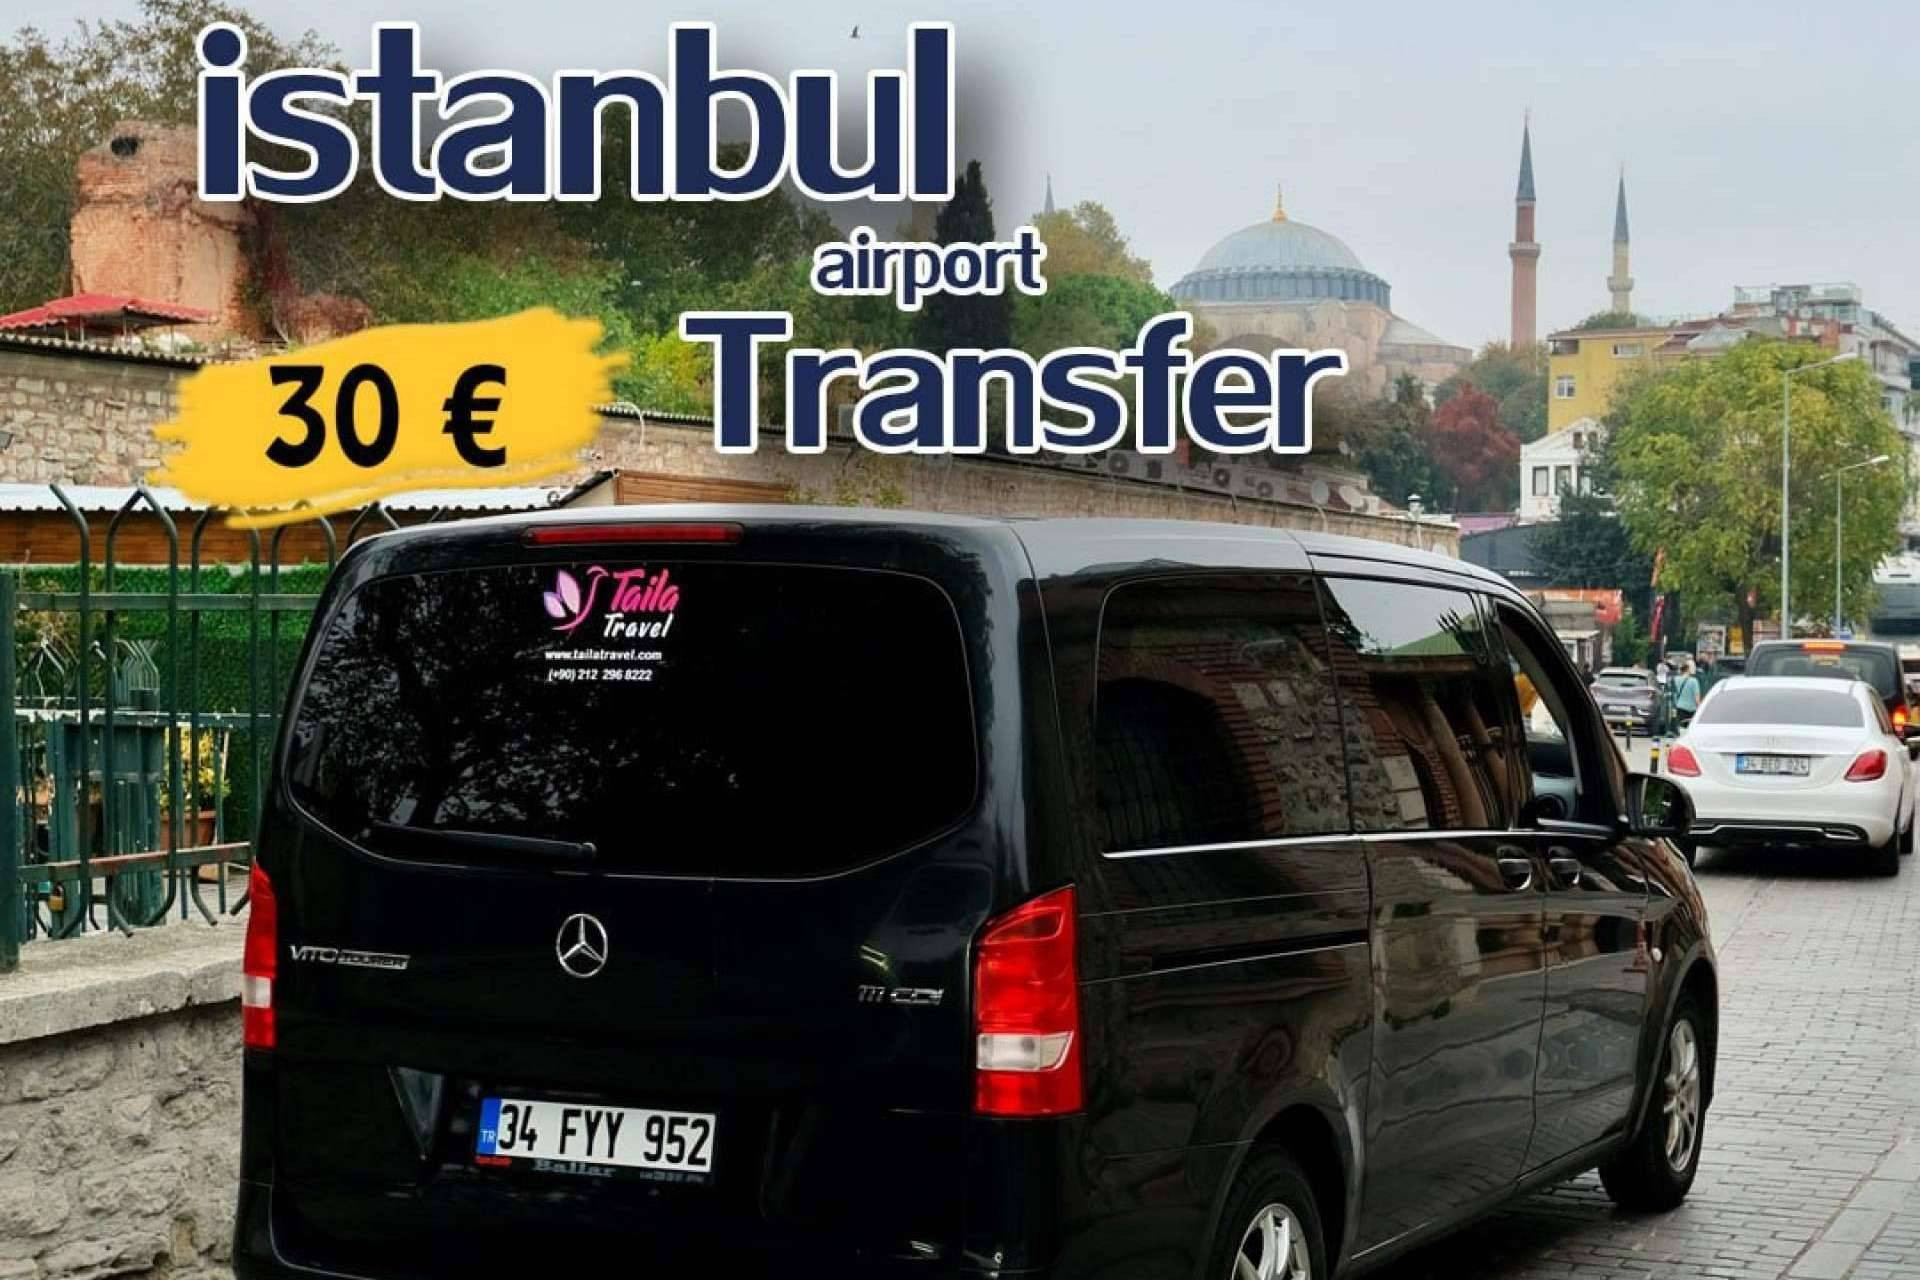  Contratar Airport transfer in Istanbul con la compañía Rento Airport Transfer 